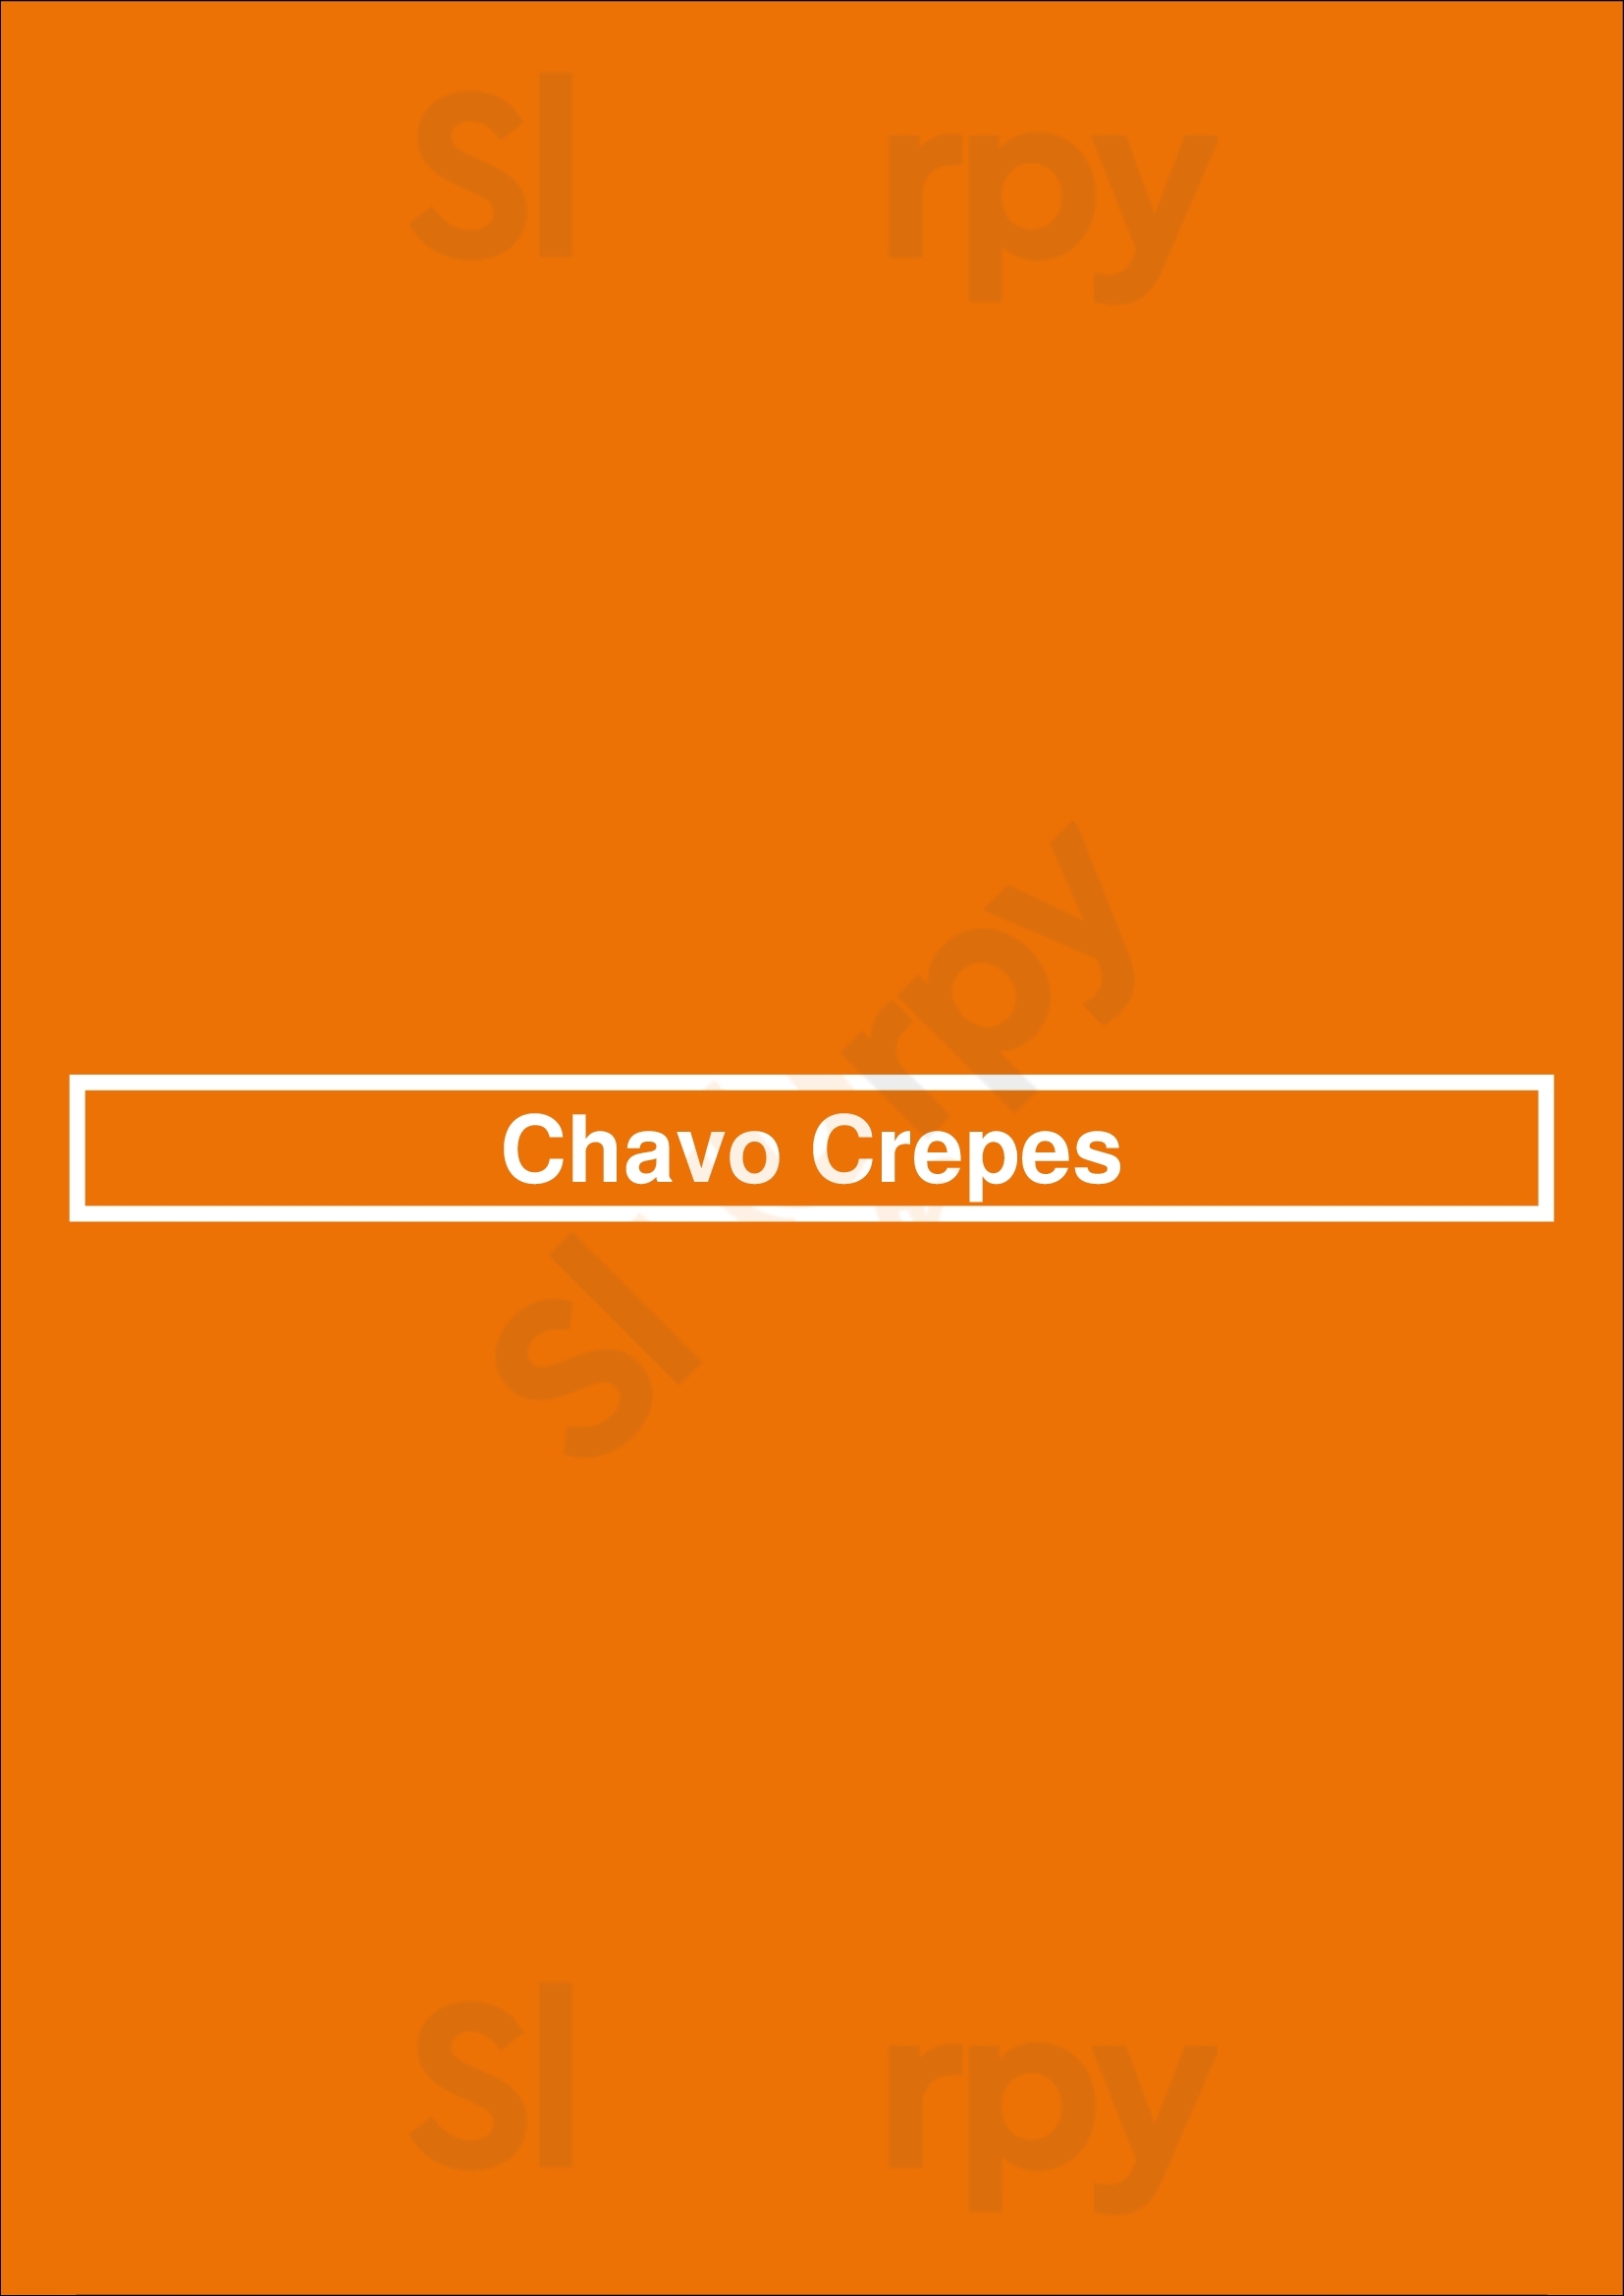 Chavo Crepes Barrie Menu - 1